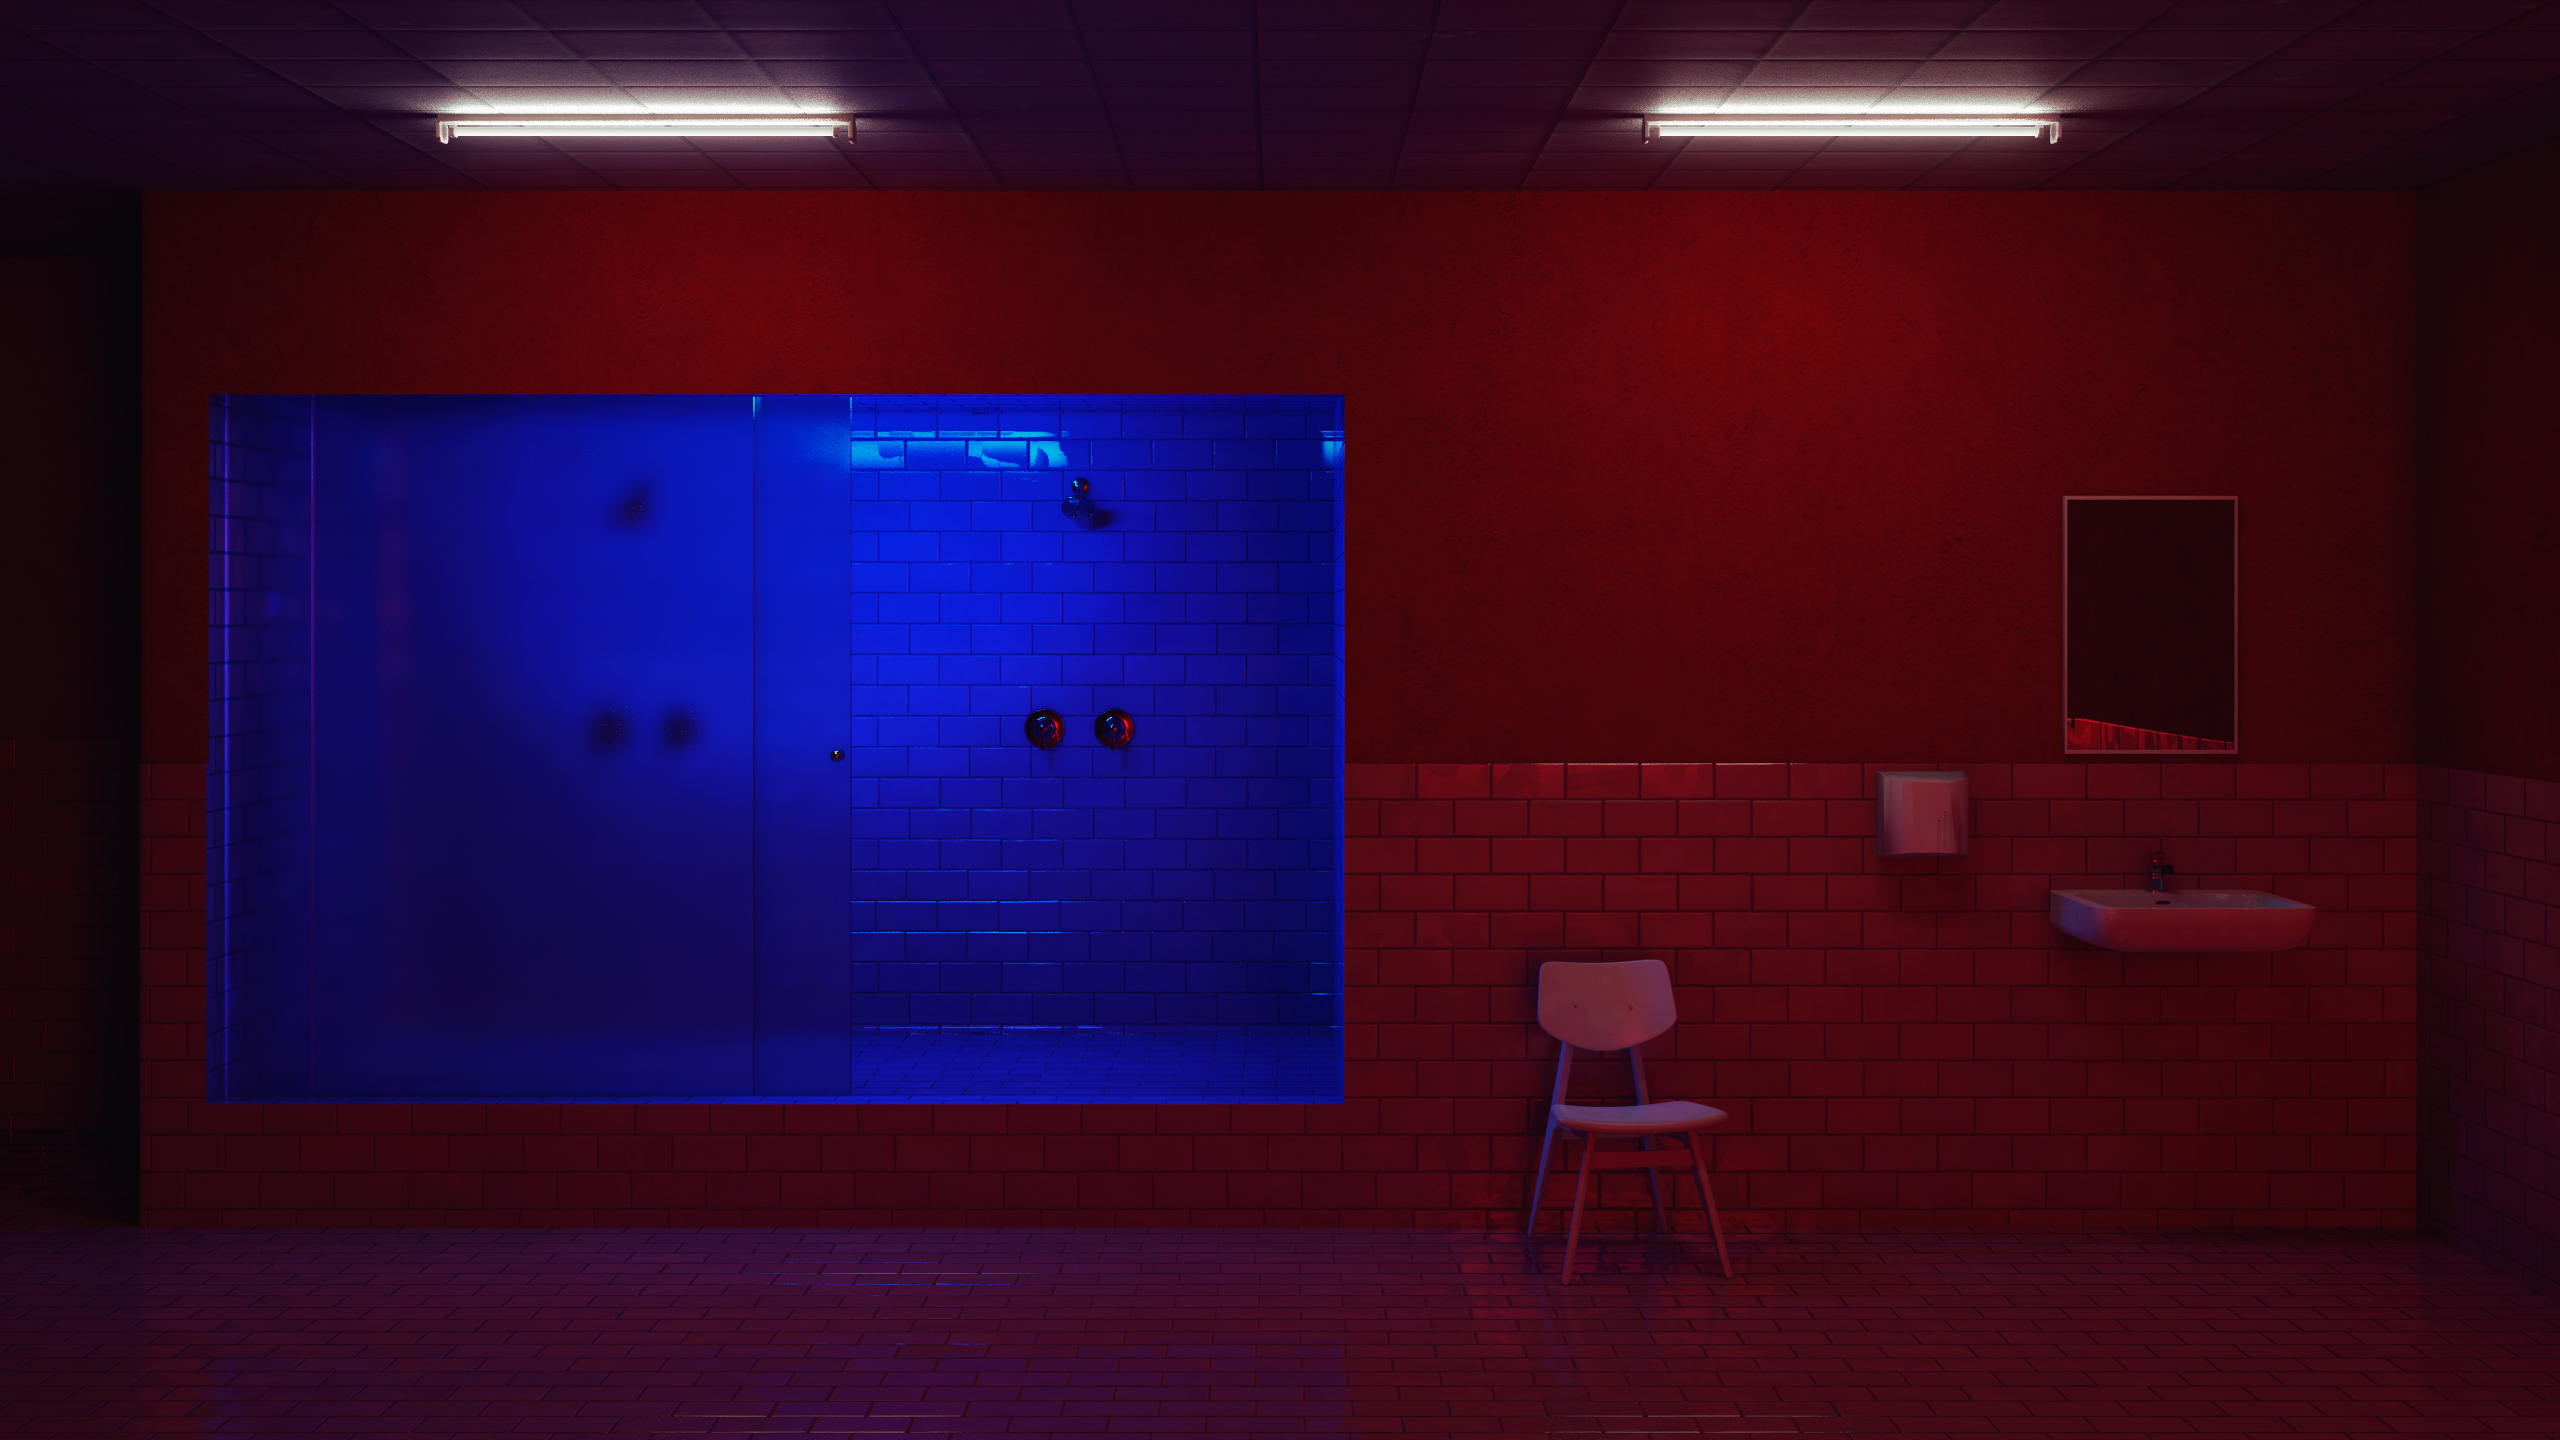 General 2560x1440 CGI digital art bathroom neon shower red blue tiles chair mirror minimalism interior design creepy